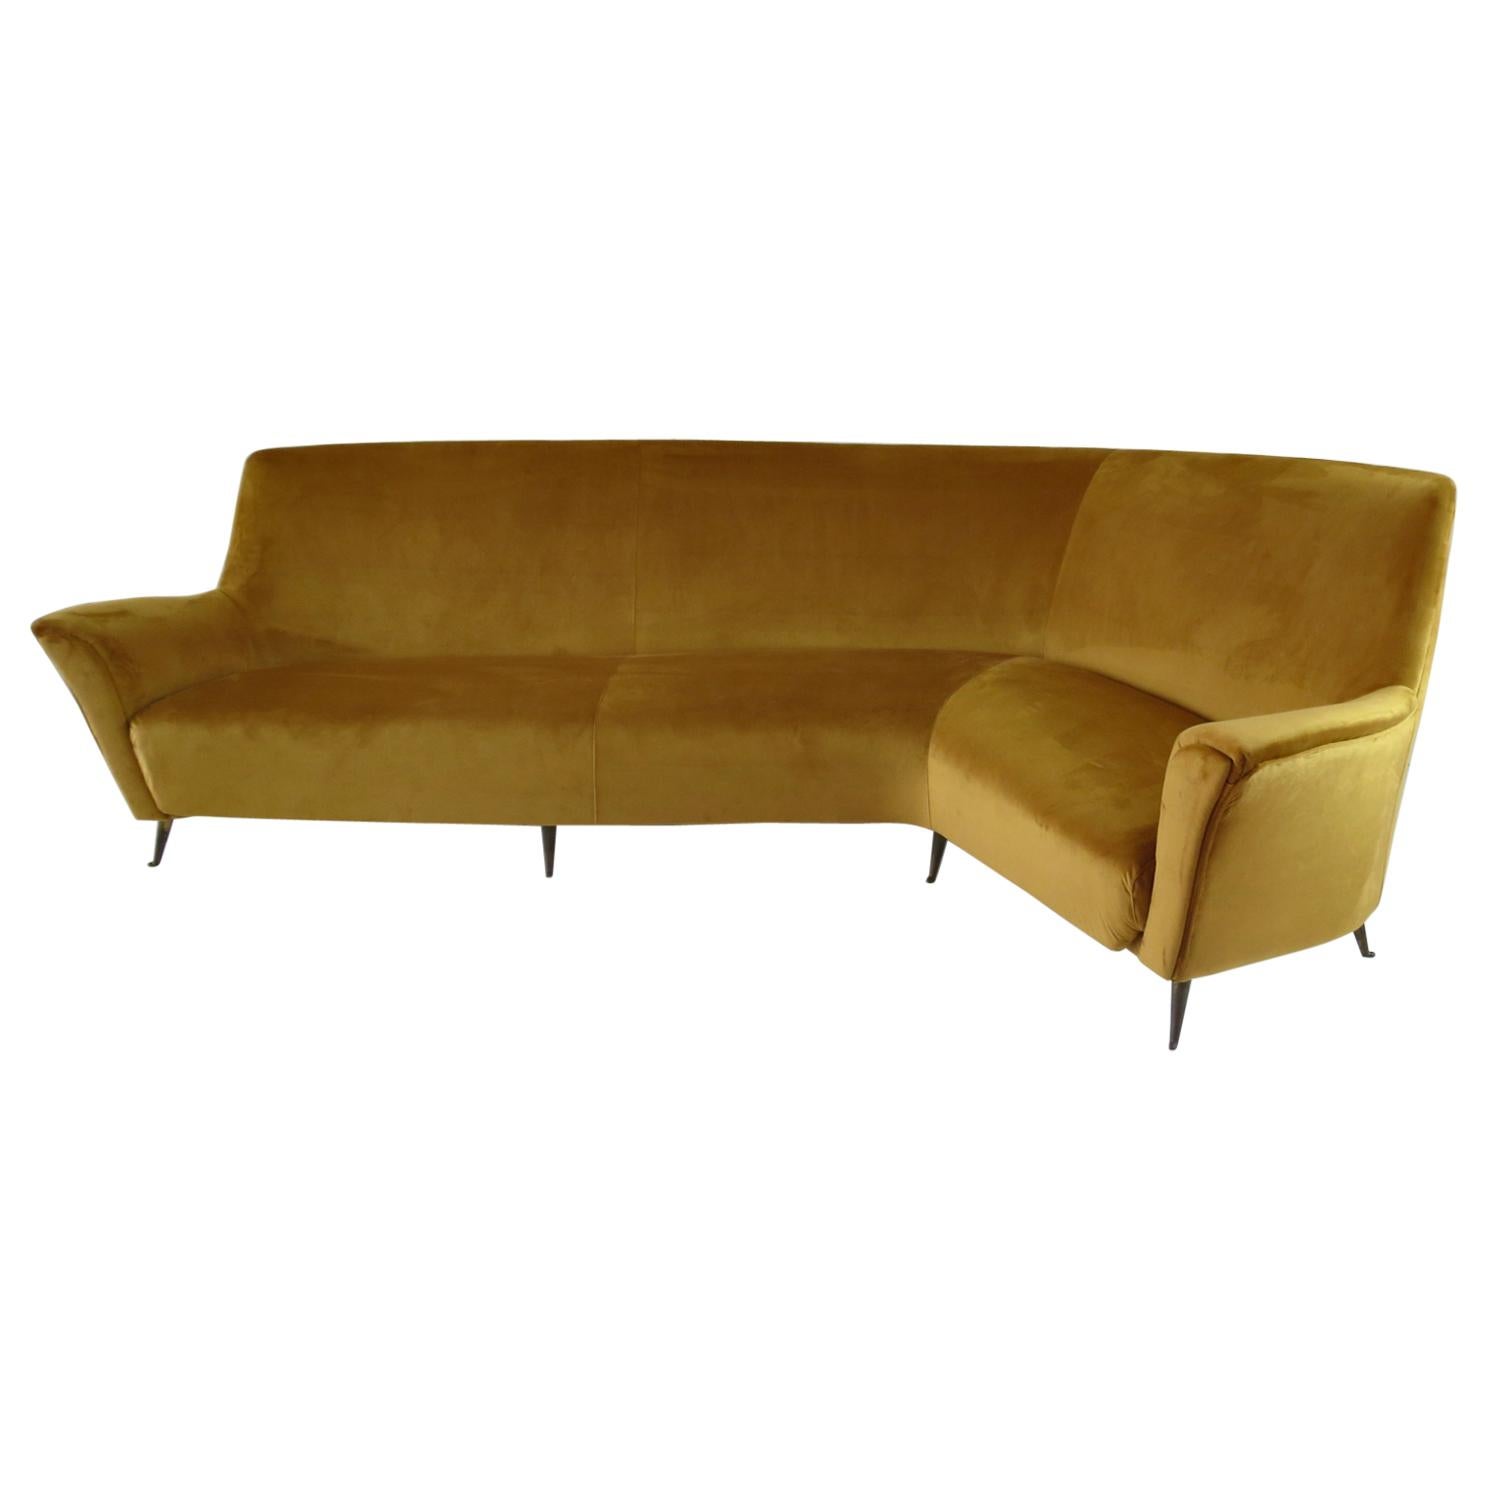 Rare Ico & Luisa Parisi Large Gold Yellow Velvet Curved Sofa by Isa, circa 1952